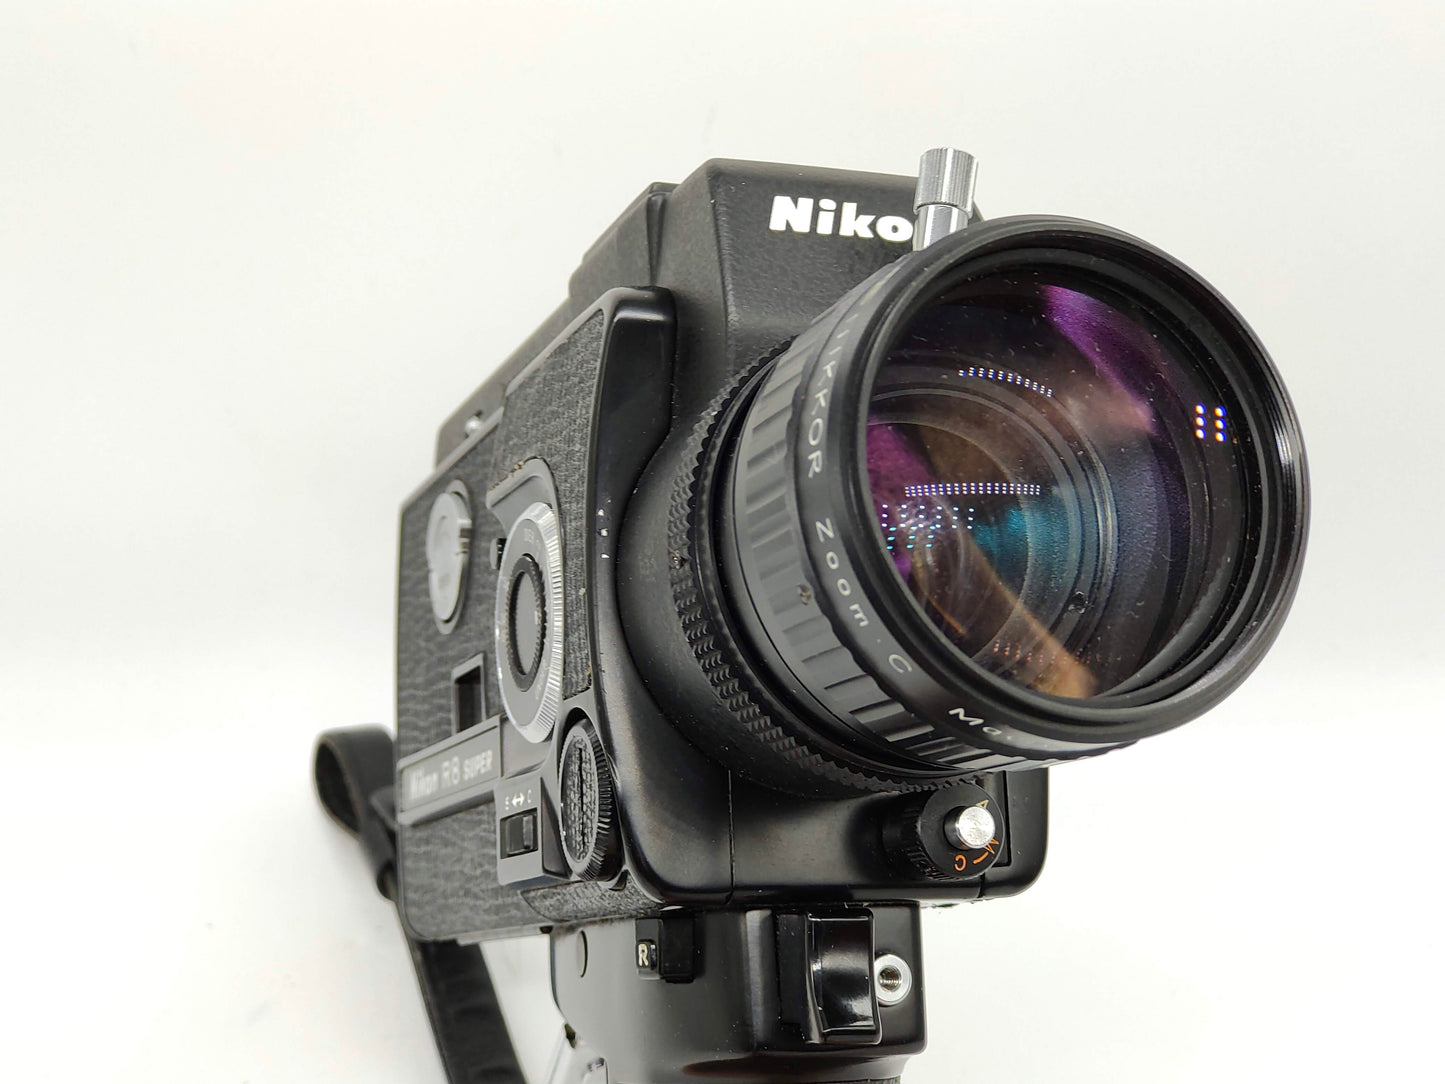 FILM TESTED Nikon R8 Super: Super-8 movie camera.